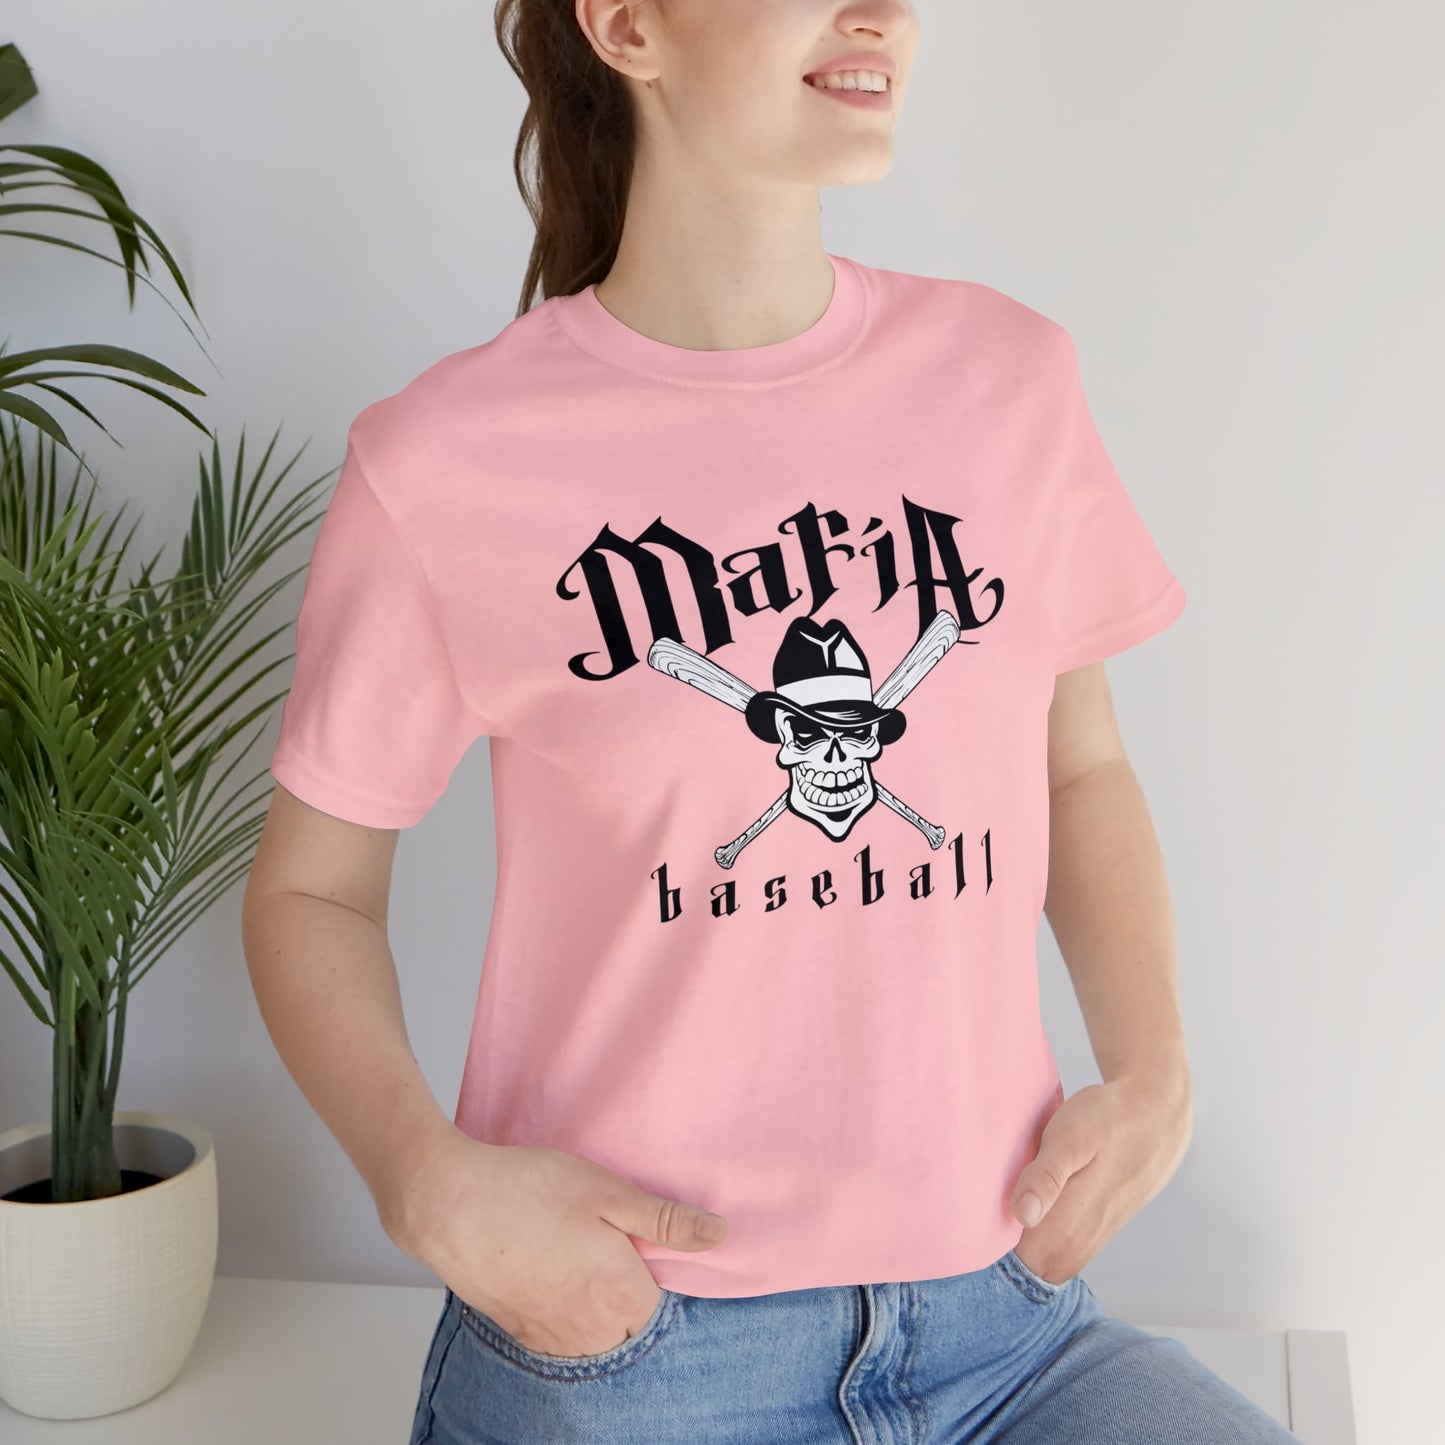 Mafia Baseball Jersey Short Sleeve Tee